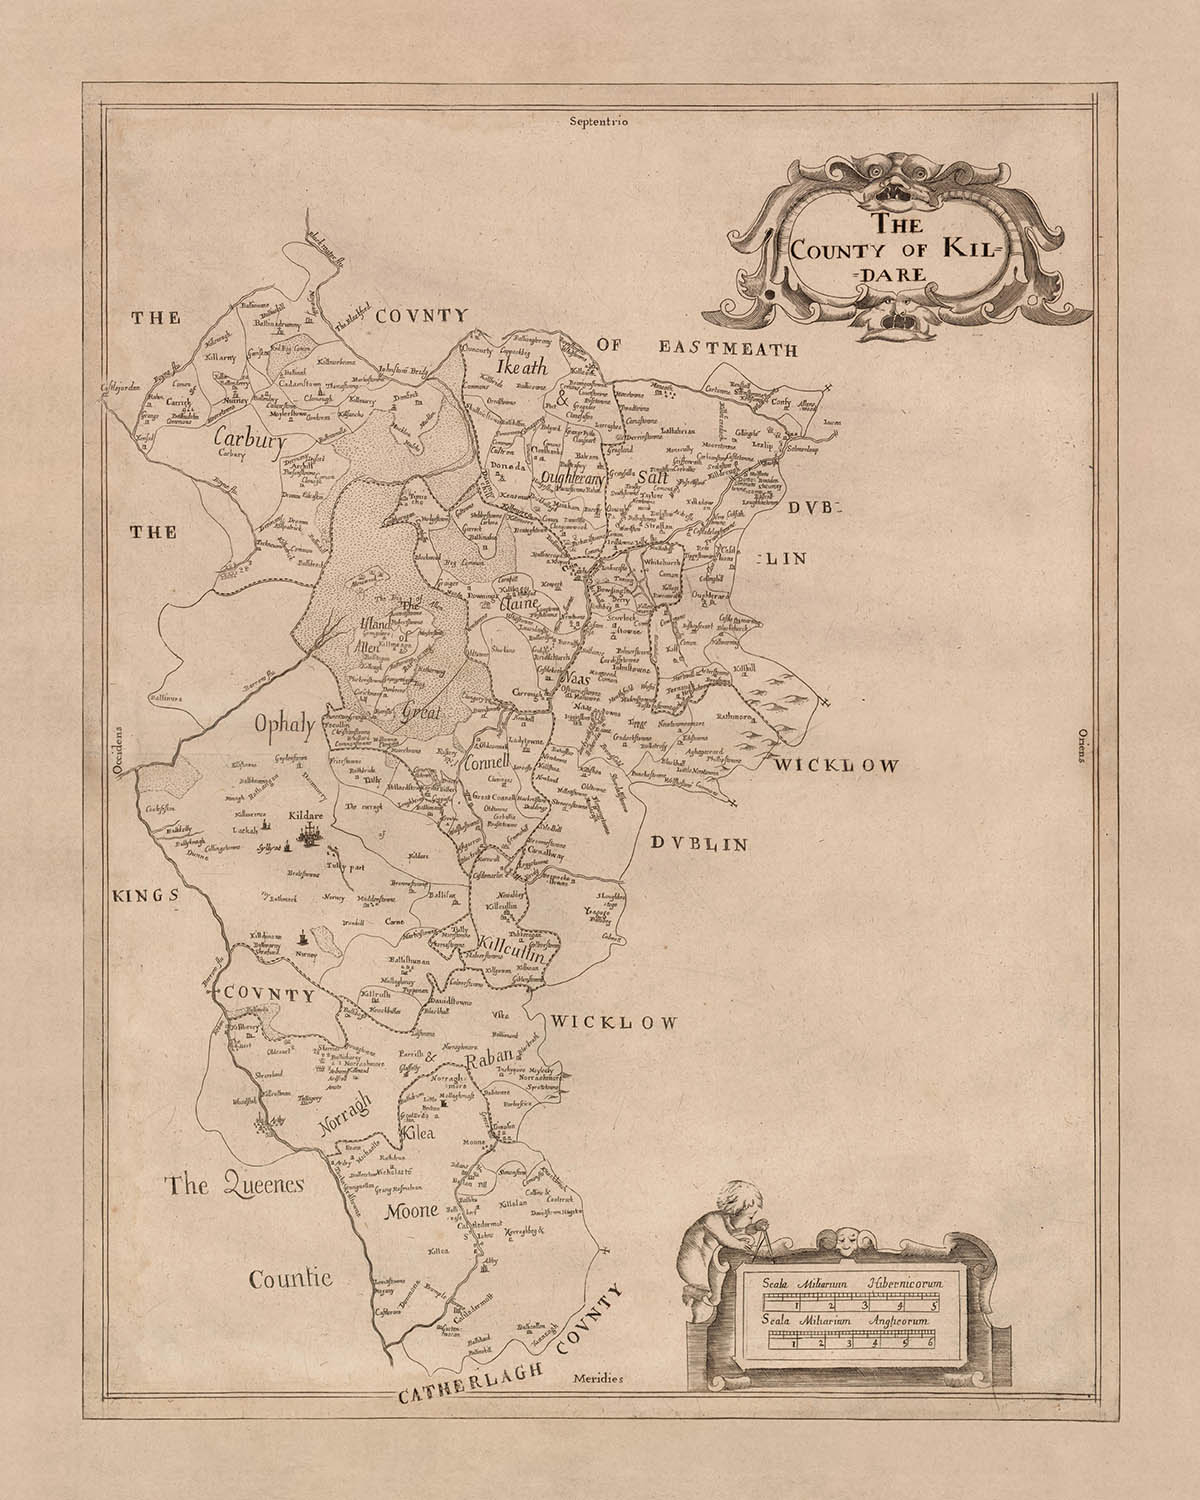 Ancienne carte du comté de Kildare par Petty, 1685 : Kildare, Naas, Maynooth, Castledermot, Monasterevan